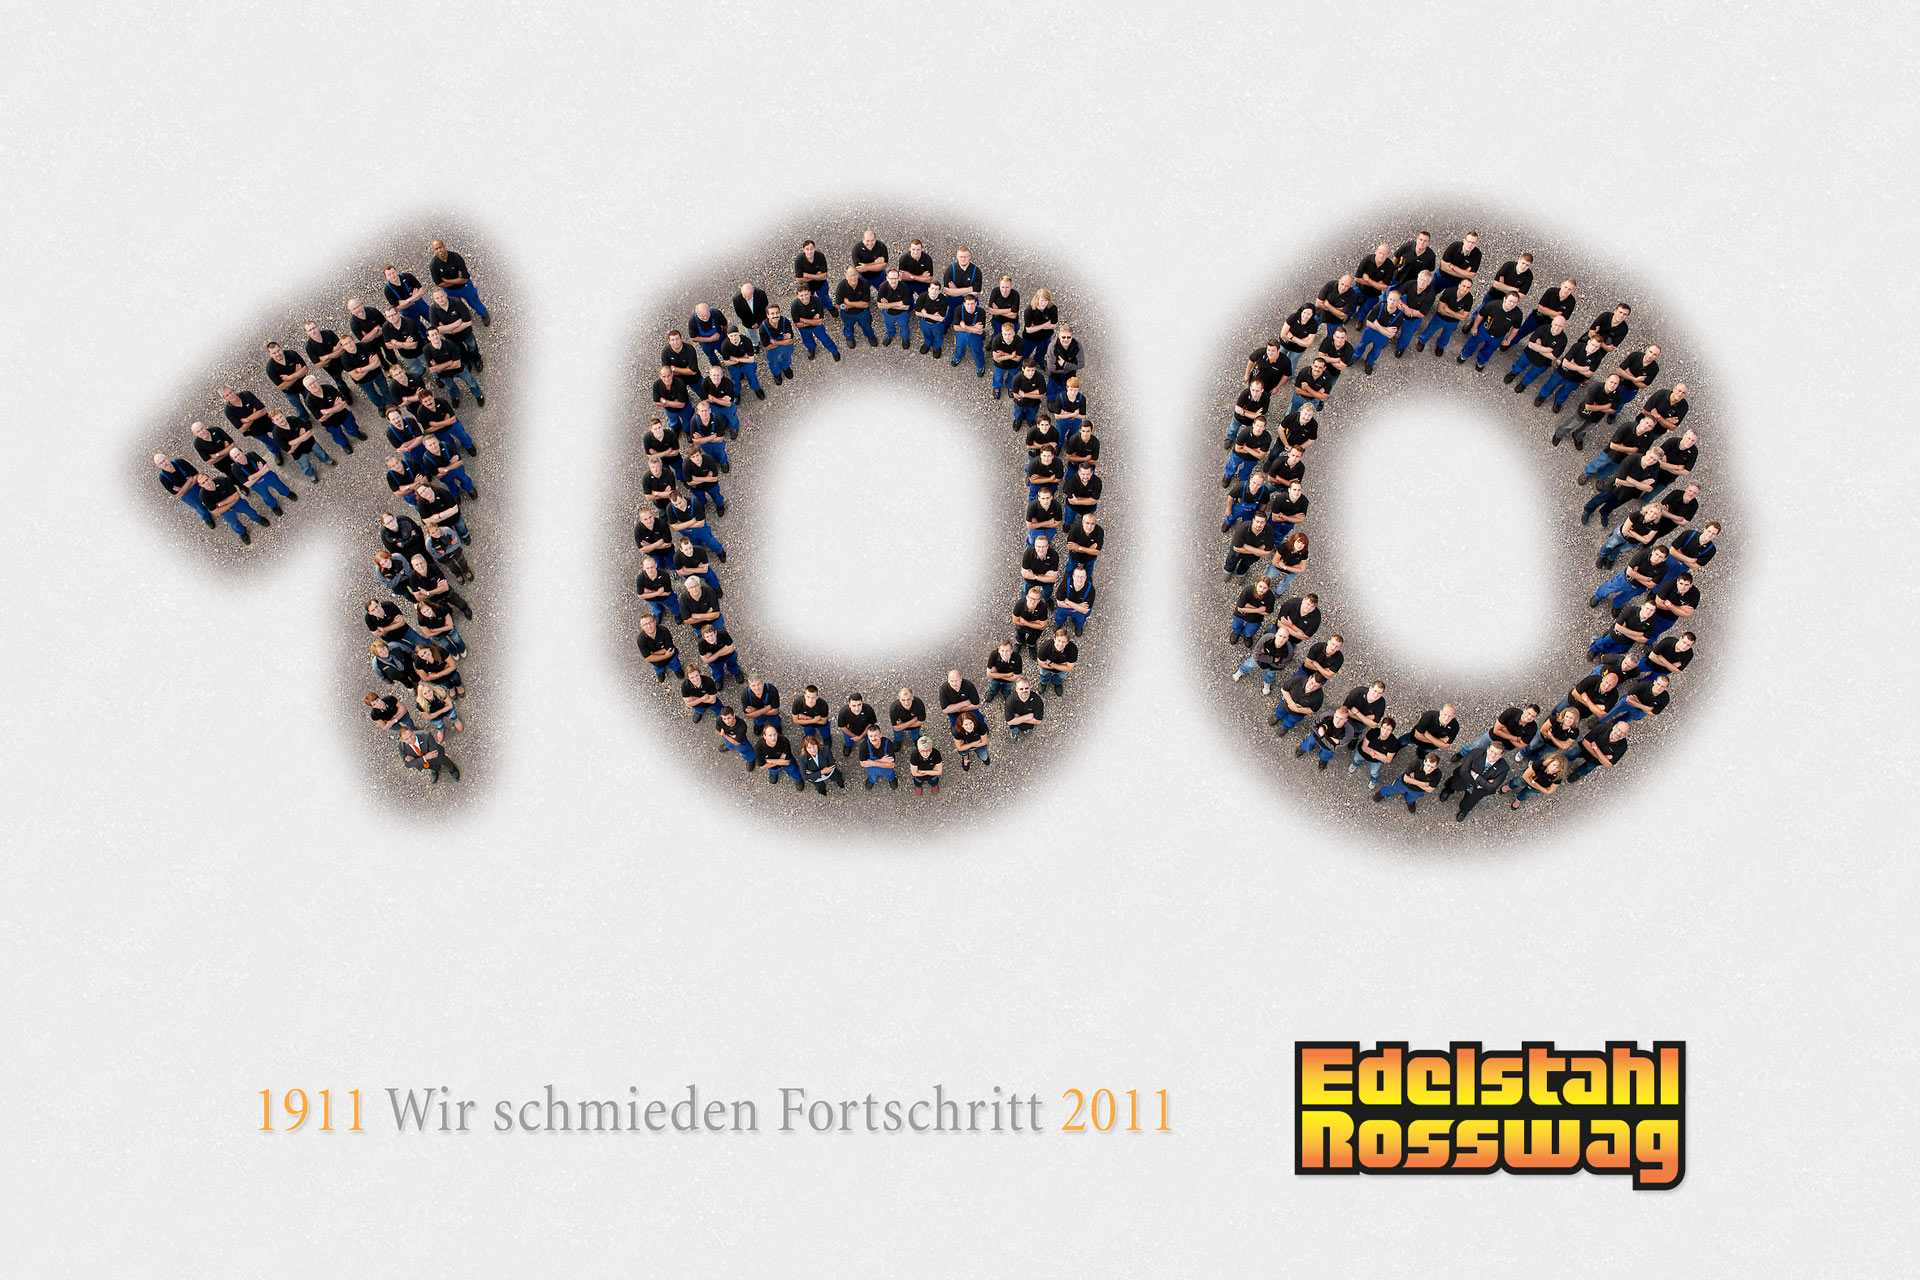 2011: 100 aniversario de Edelstahl Rosswag